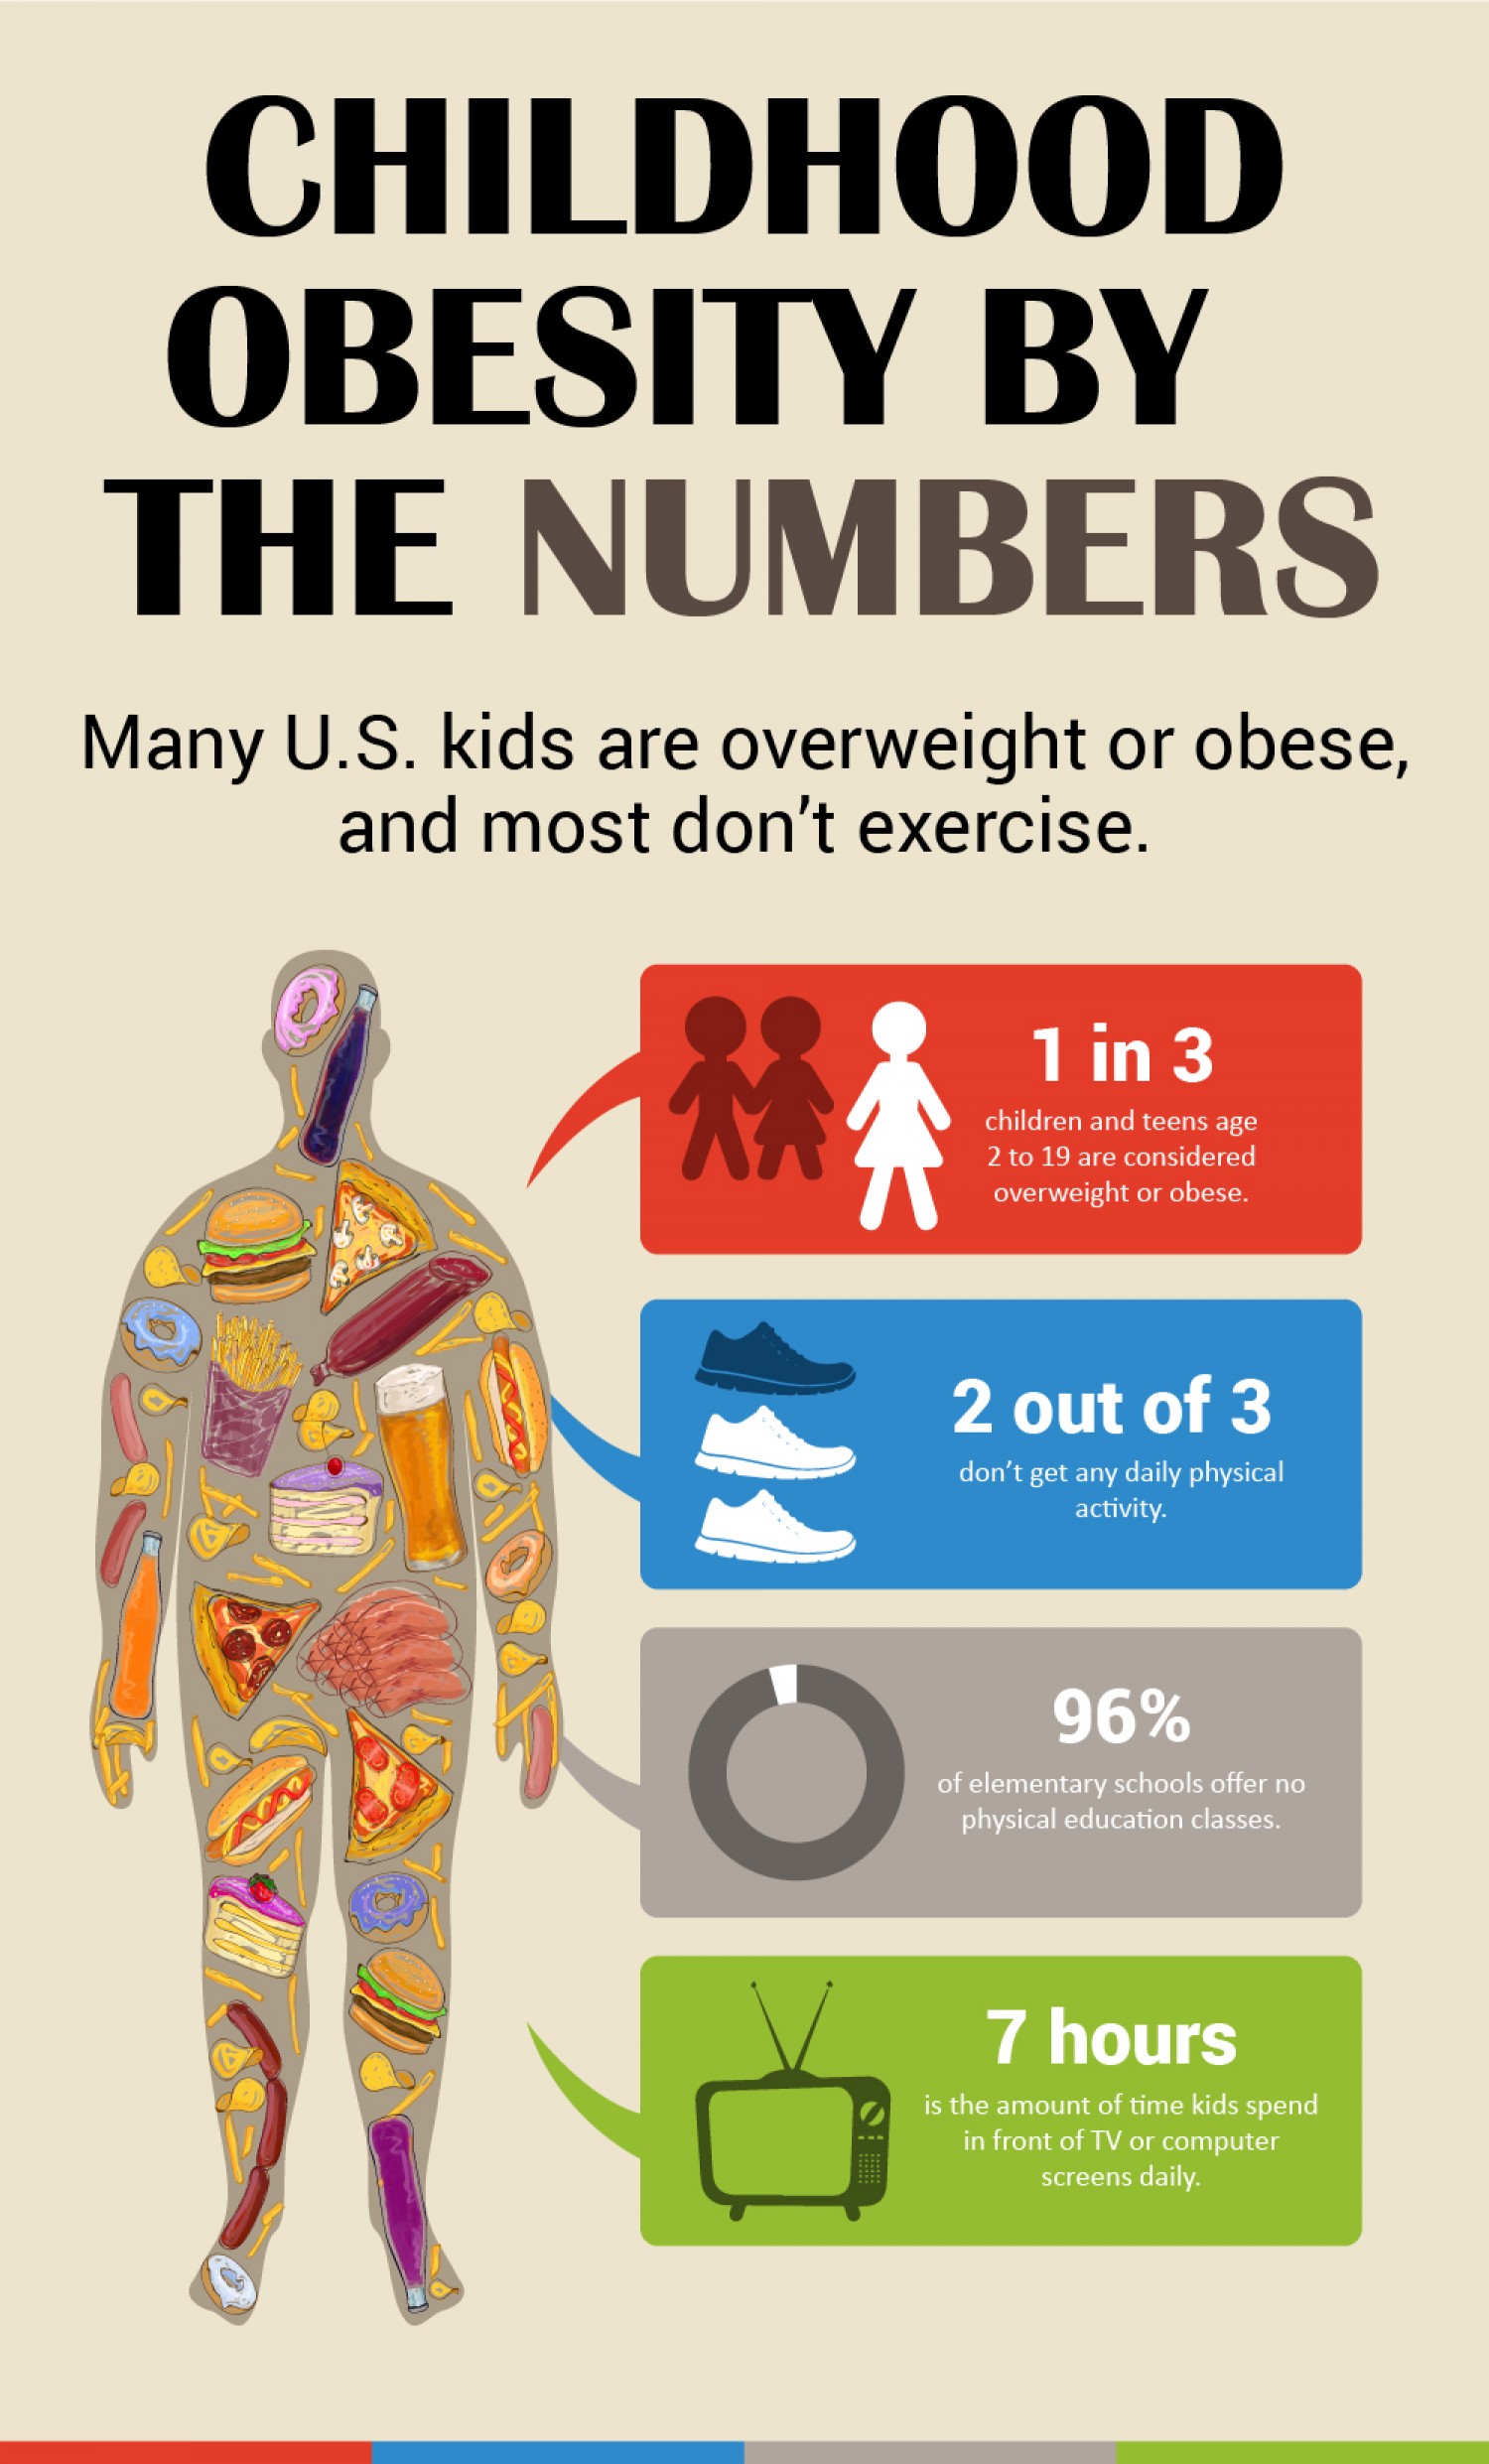 https://thumbnails-visually.netdna-ssl.com/obesity-in-children_5551a4523d651_w1500.jpg